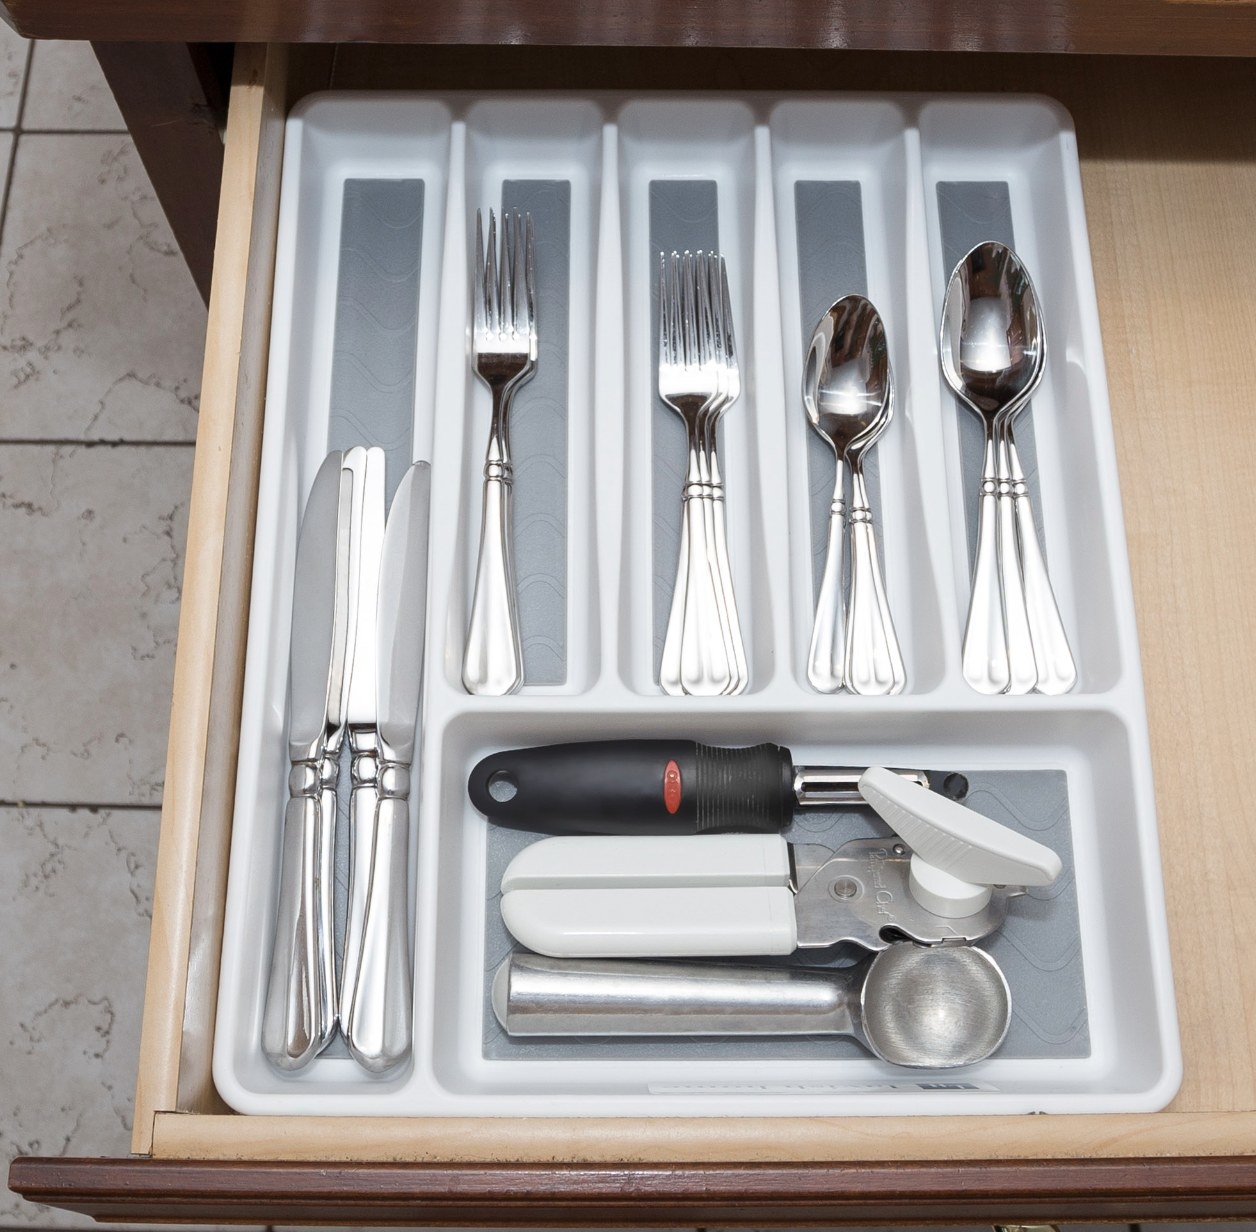 The silverware drawer organizer